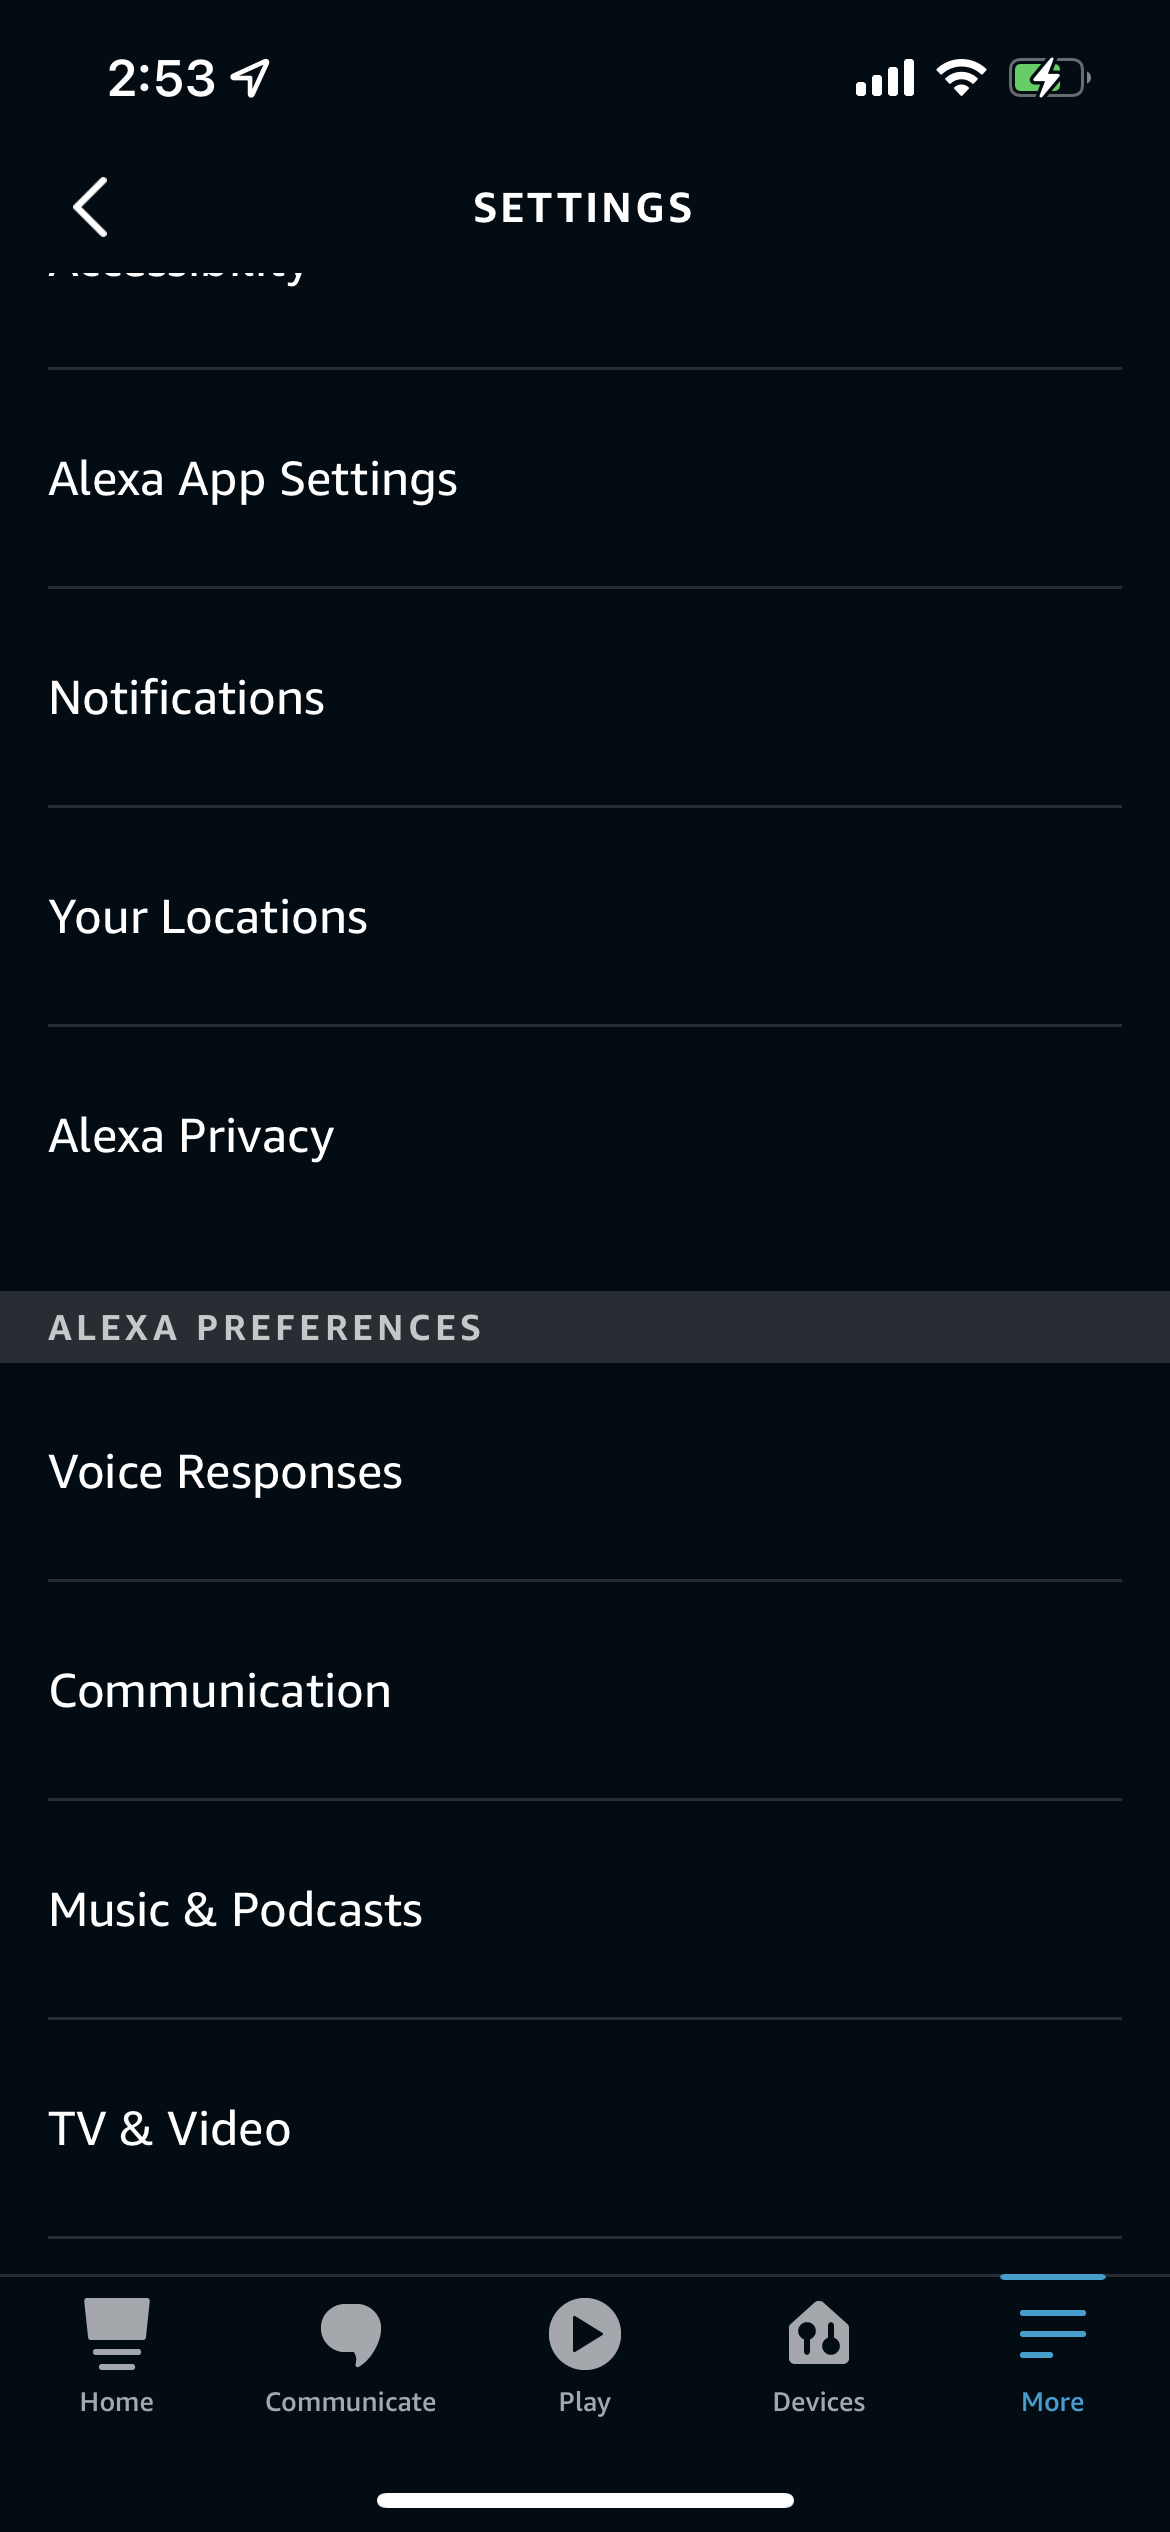 Various Settings options in the Amazon Alexa app